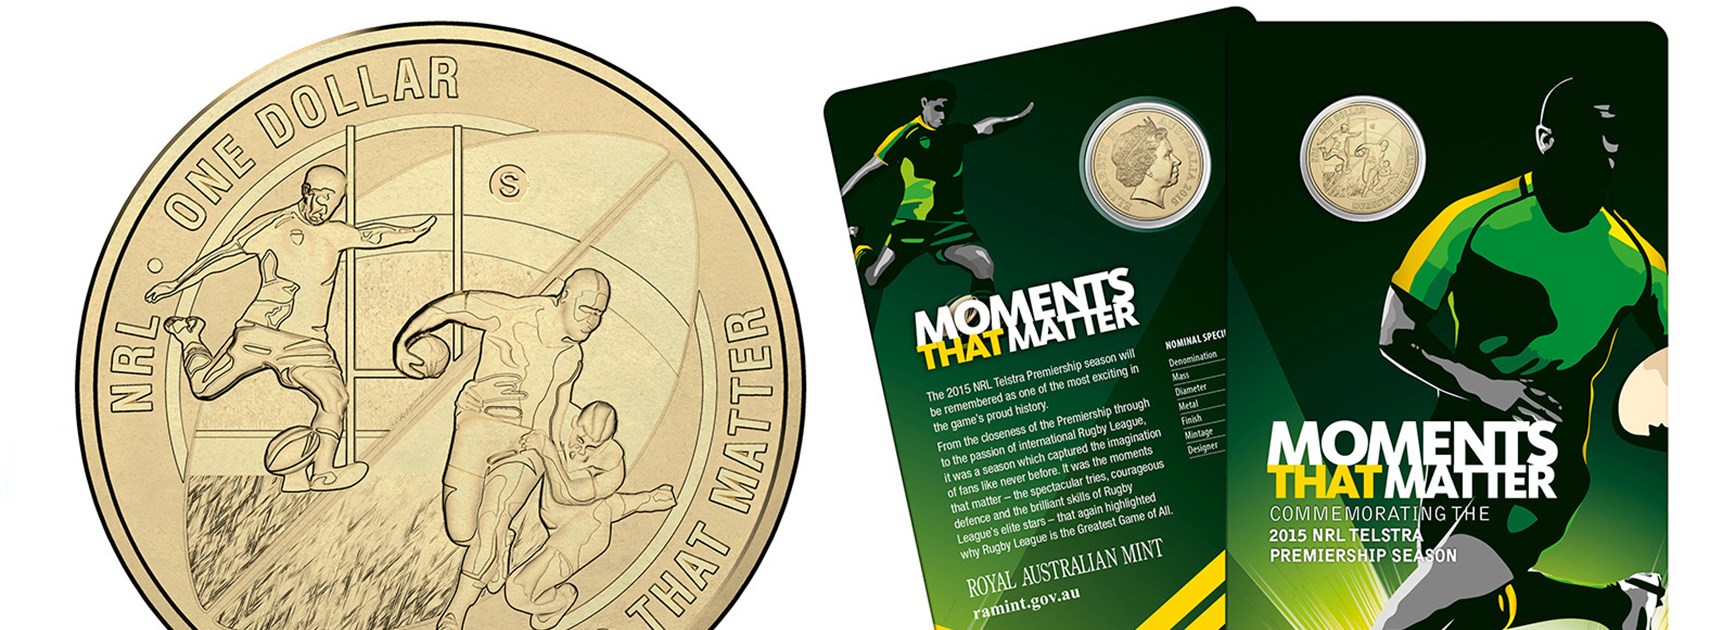 The Royal Australian Mint commemorates NRL Moments that Matter.